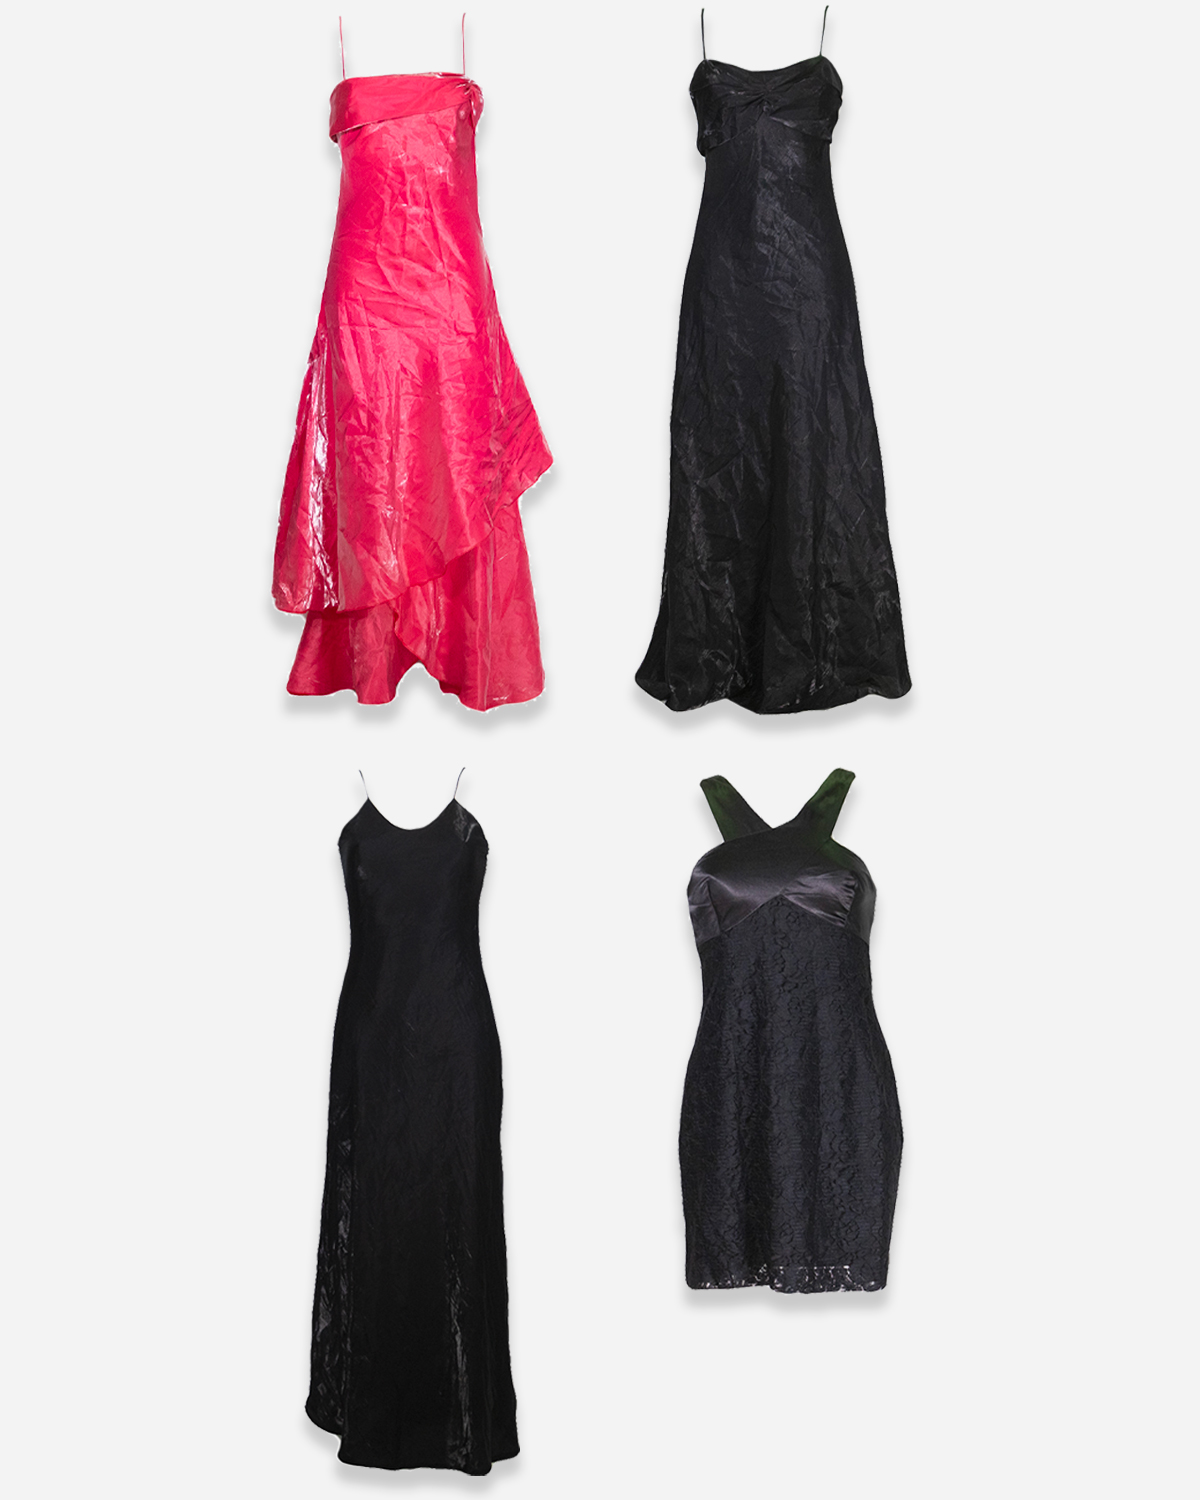 Women's evening dresses: 4 pieces